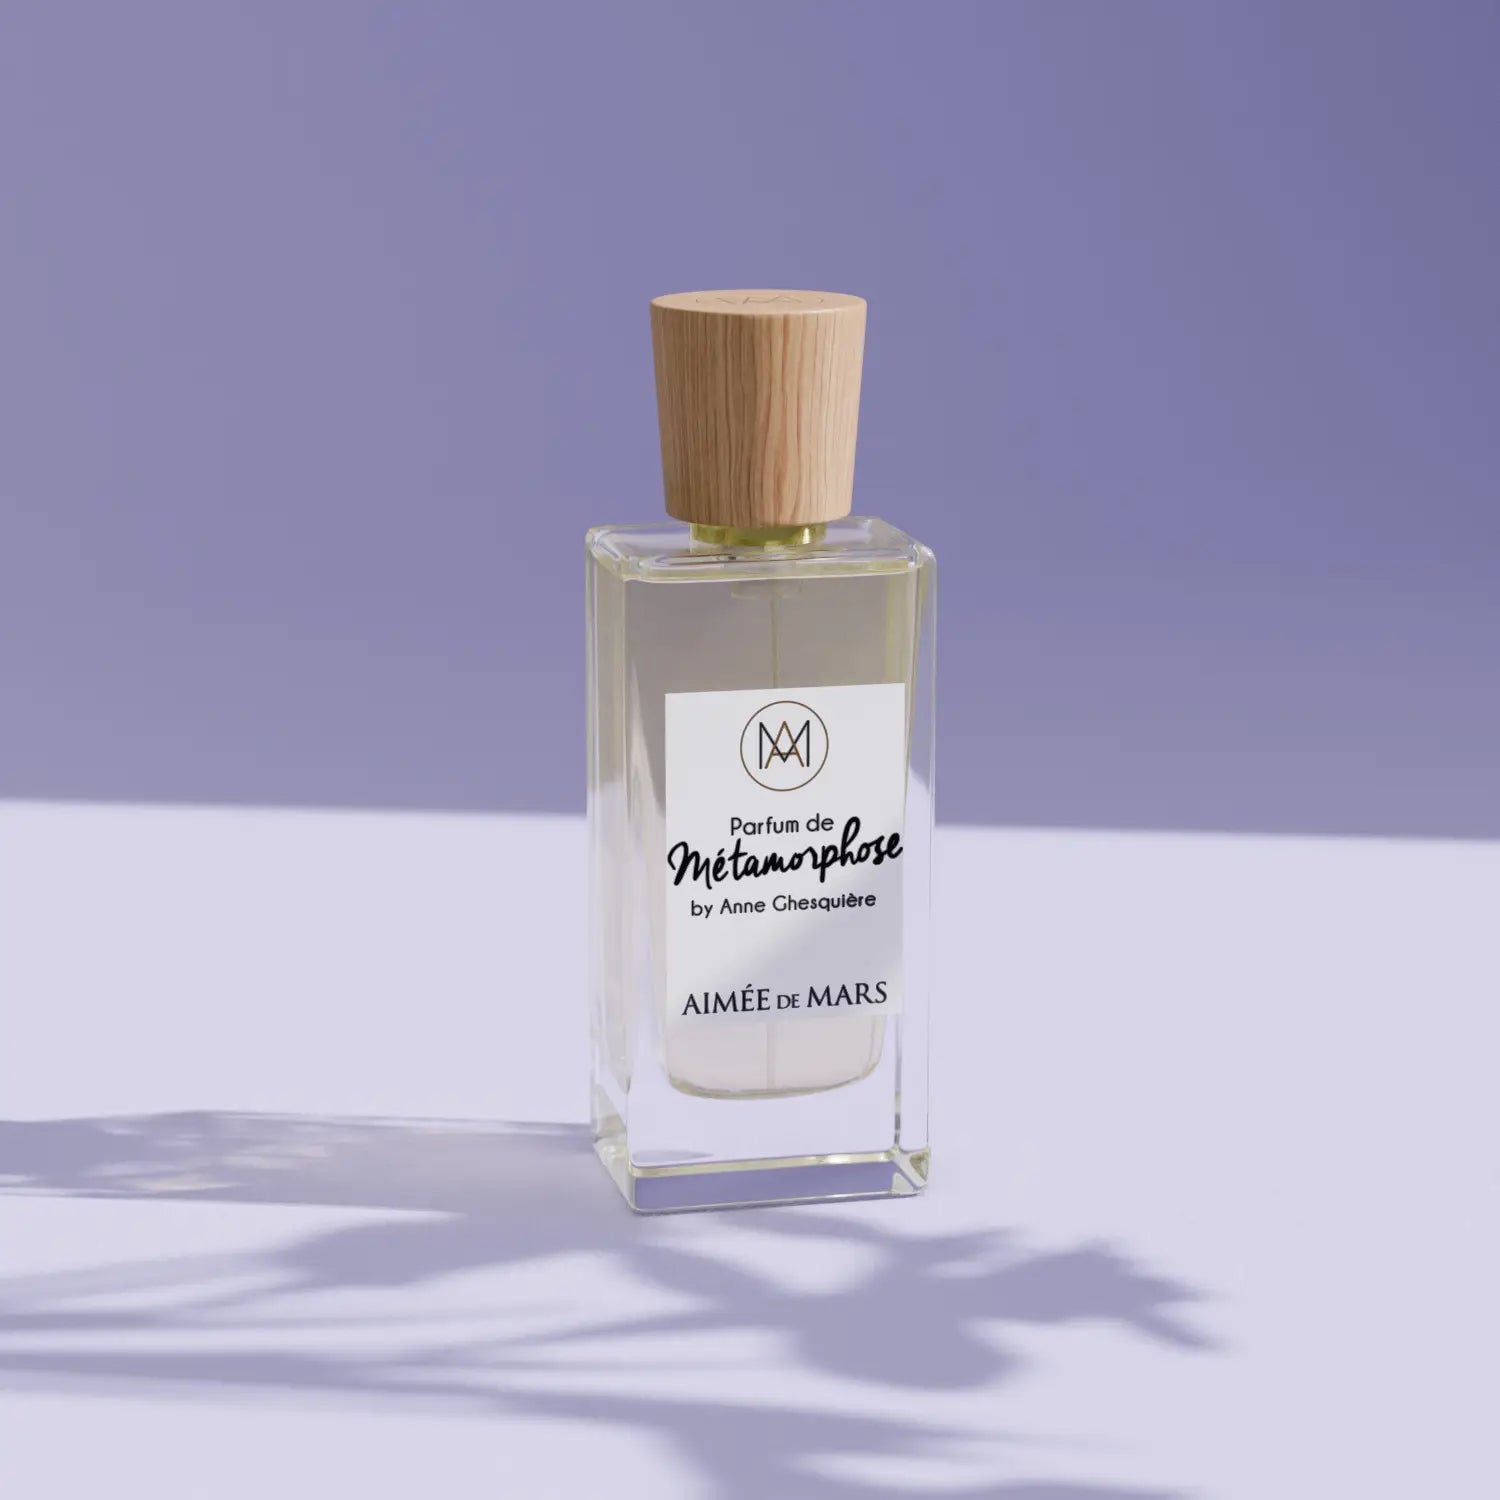 Métamorphose eau de parfum